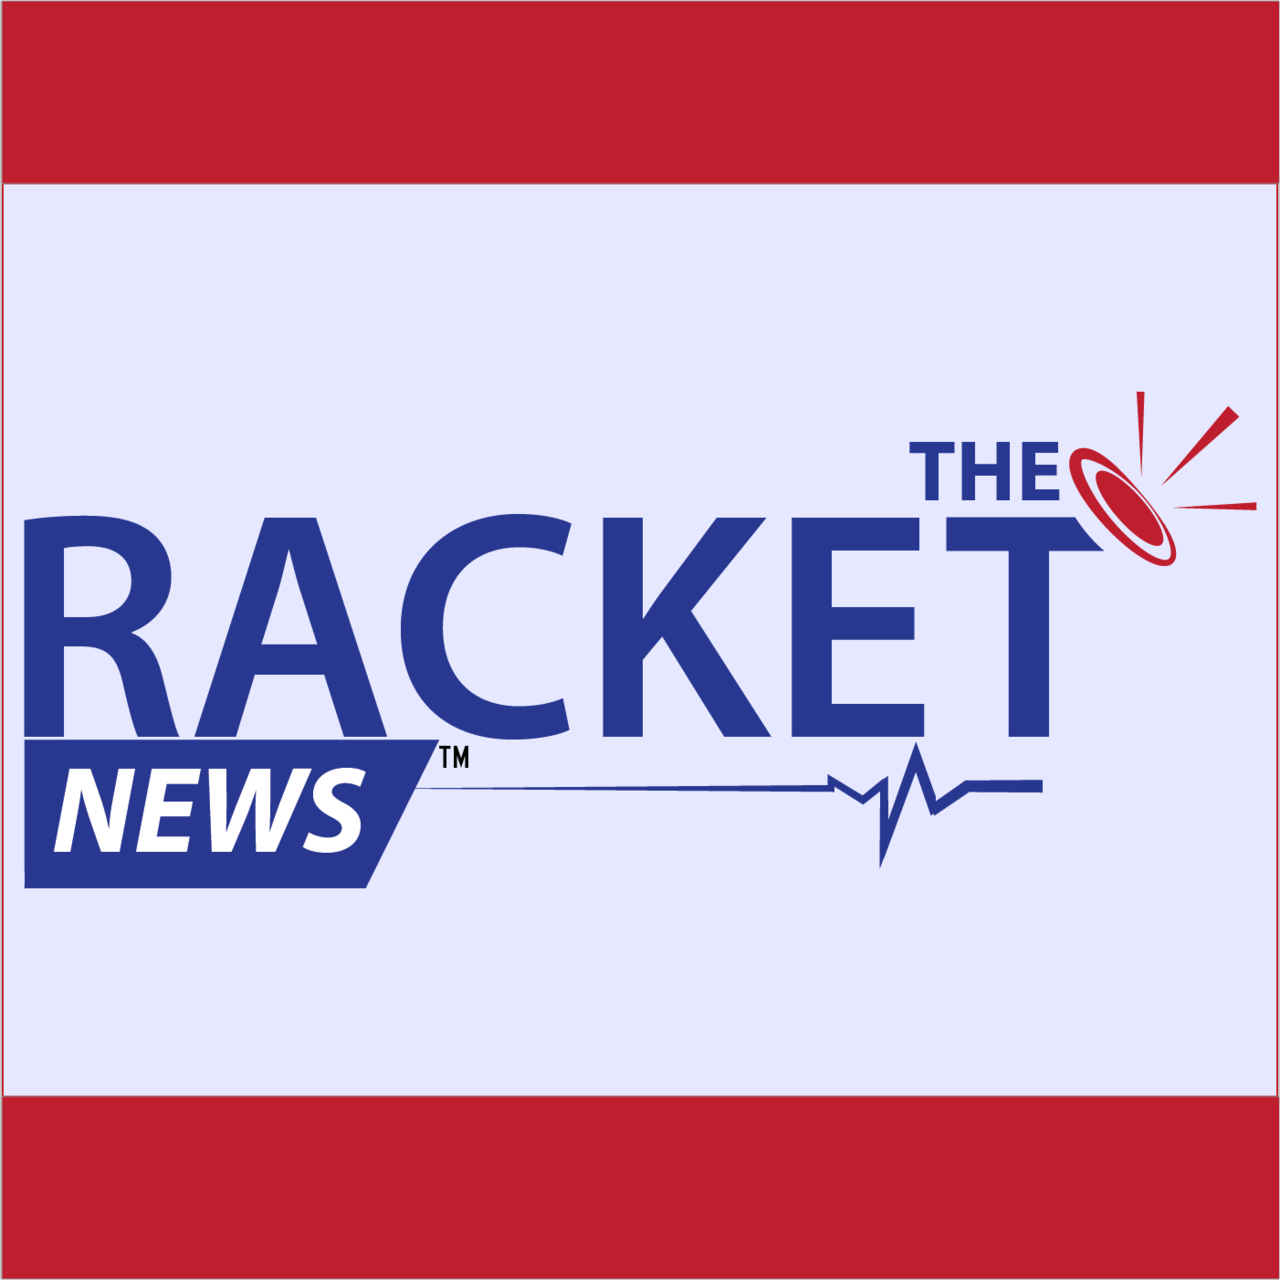 Artwork for The Racket News ™